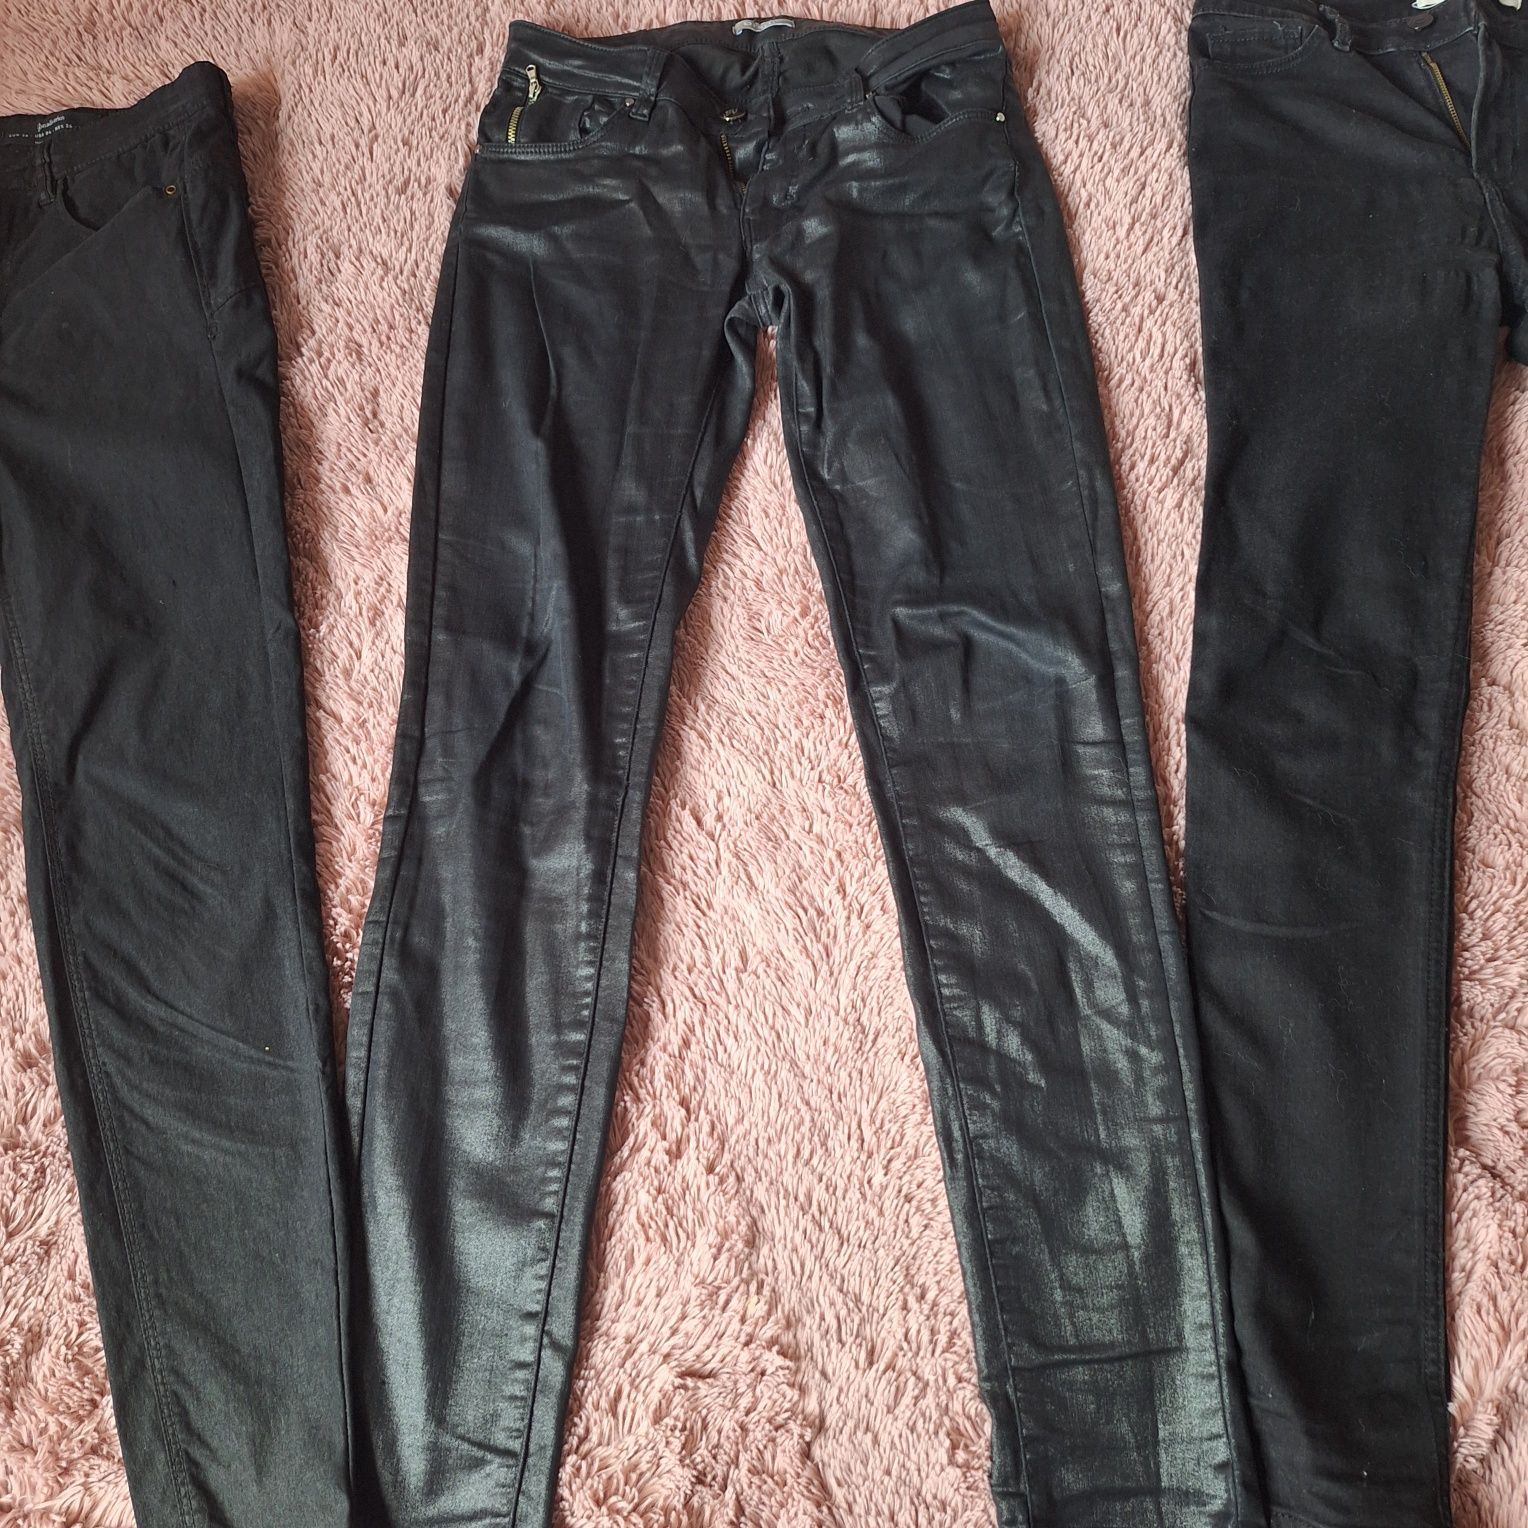 Zestaw 3 spodni damskich 34-34 Hollister Orsay Stadivarius czarne